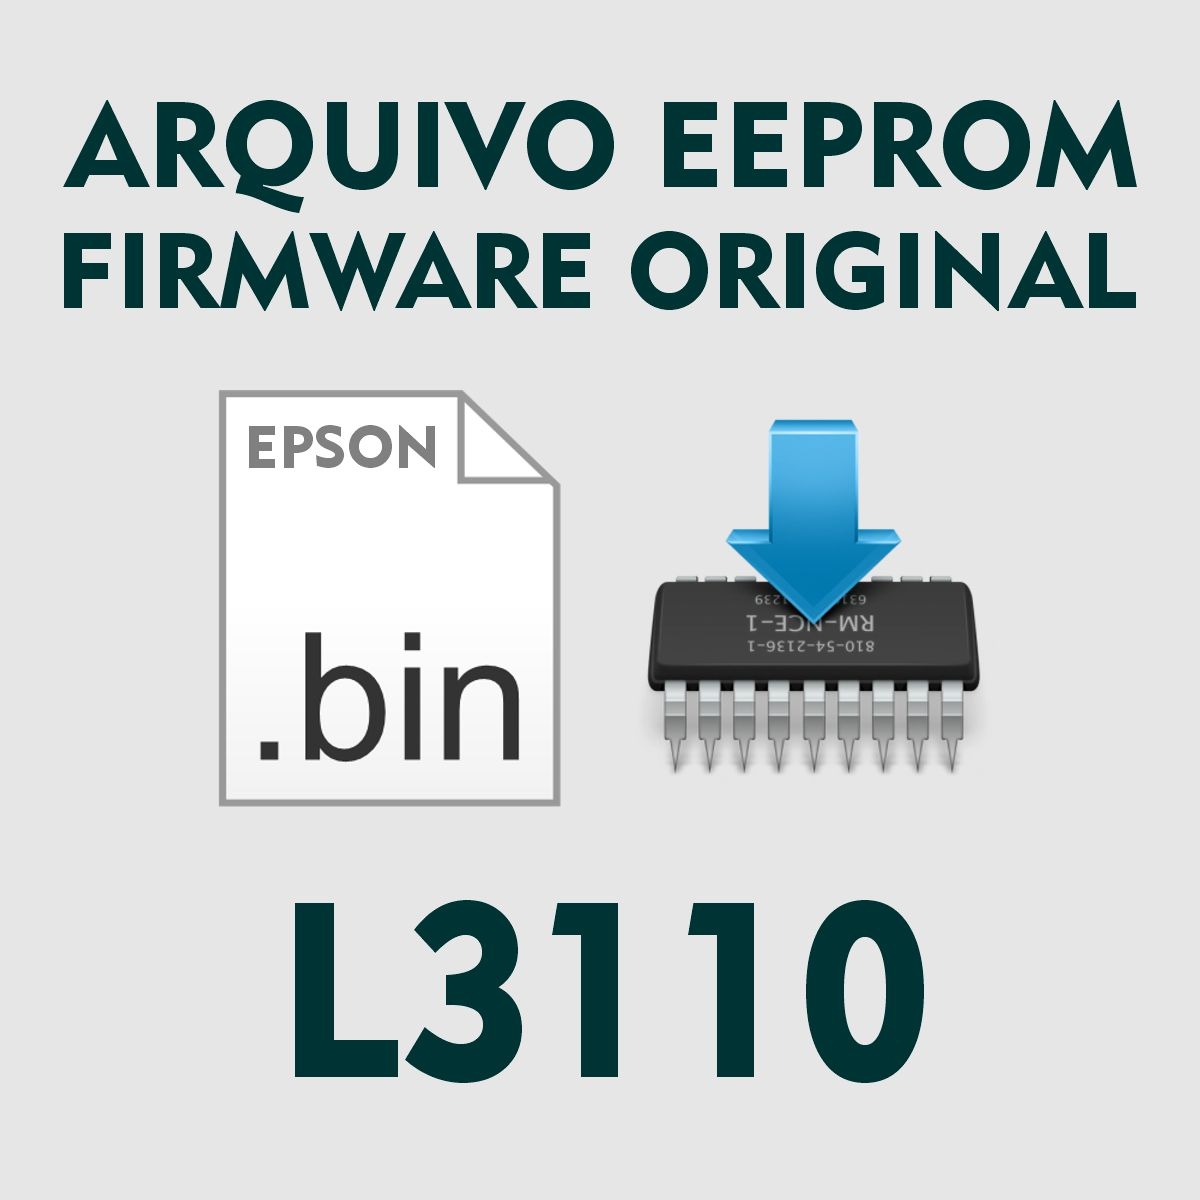 Epson L3110 | Arquivo de Eeprom Firmware .bin - Original